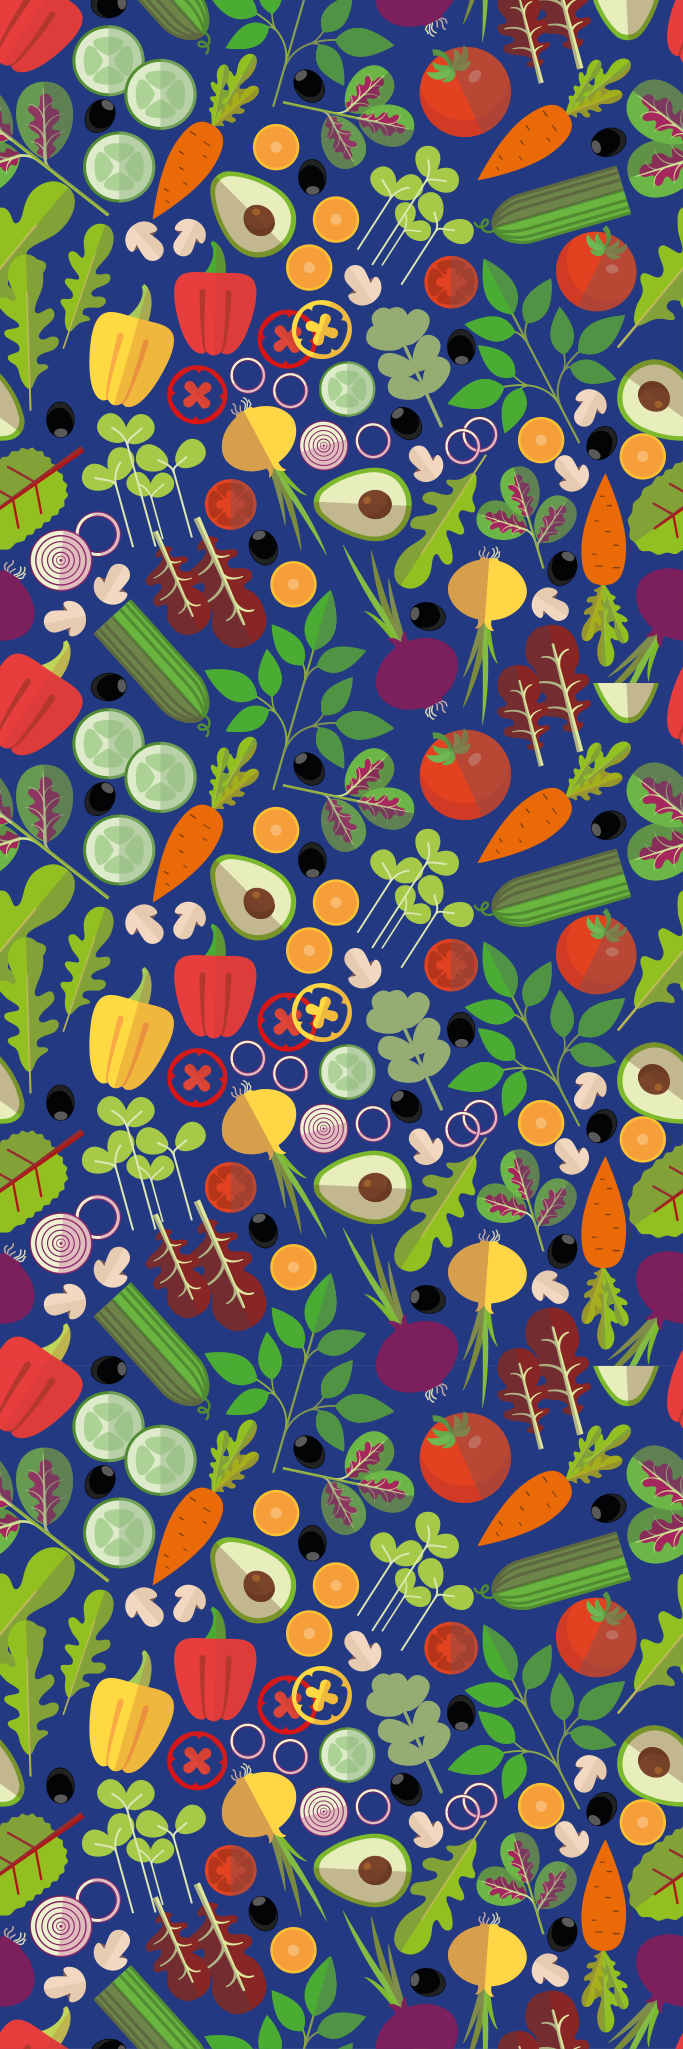 Vegetables on blue background fridge decals - TenStickers